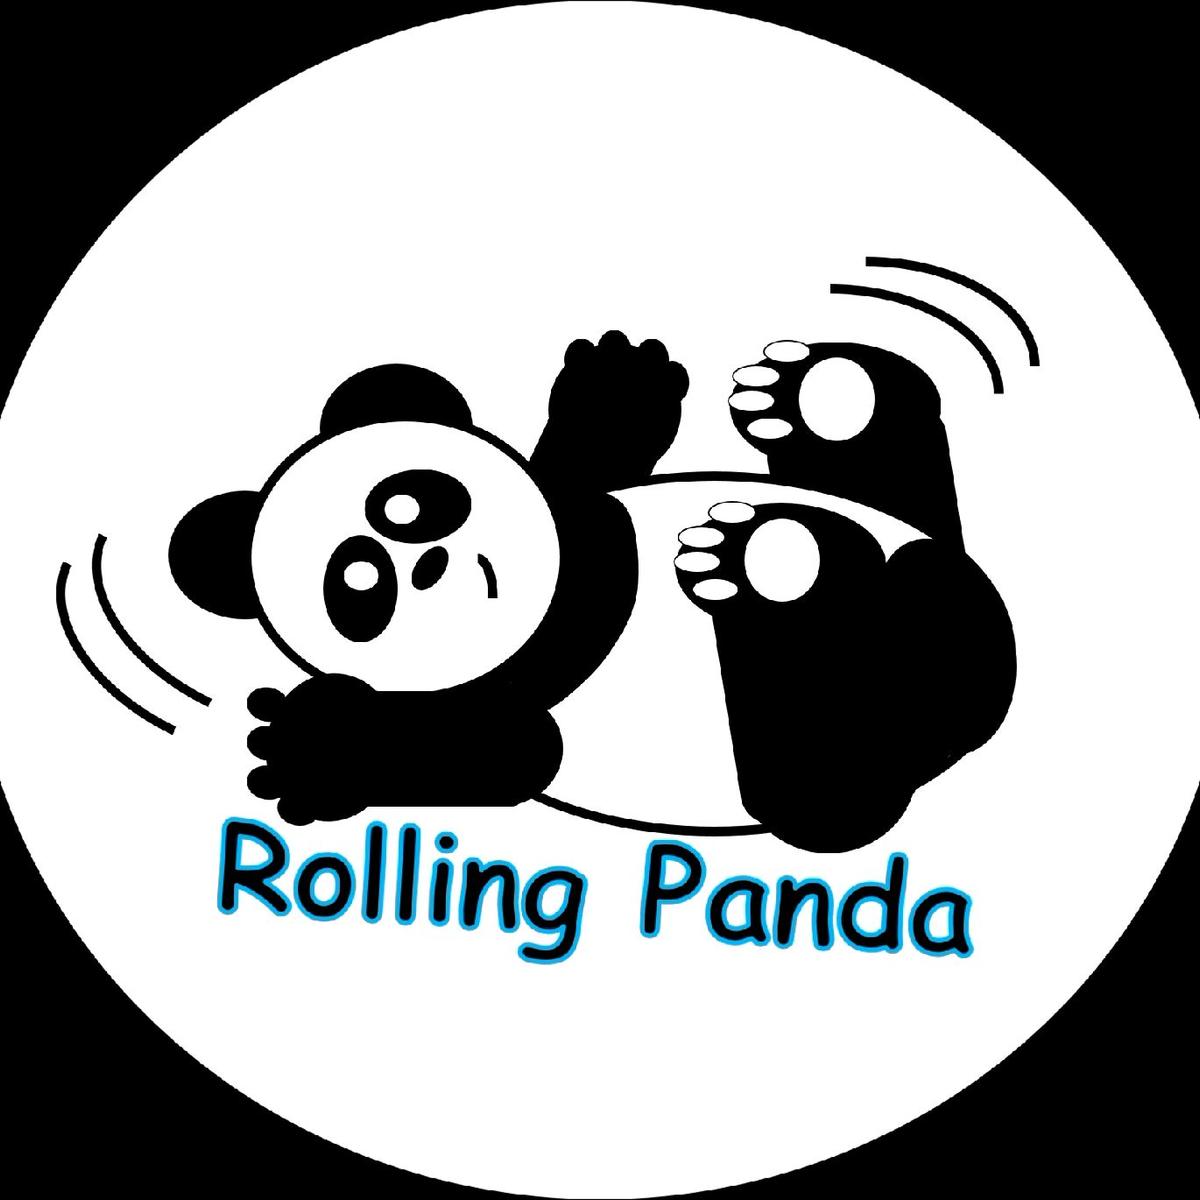 Rolling Panda's images